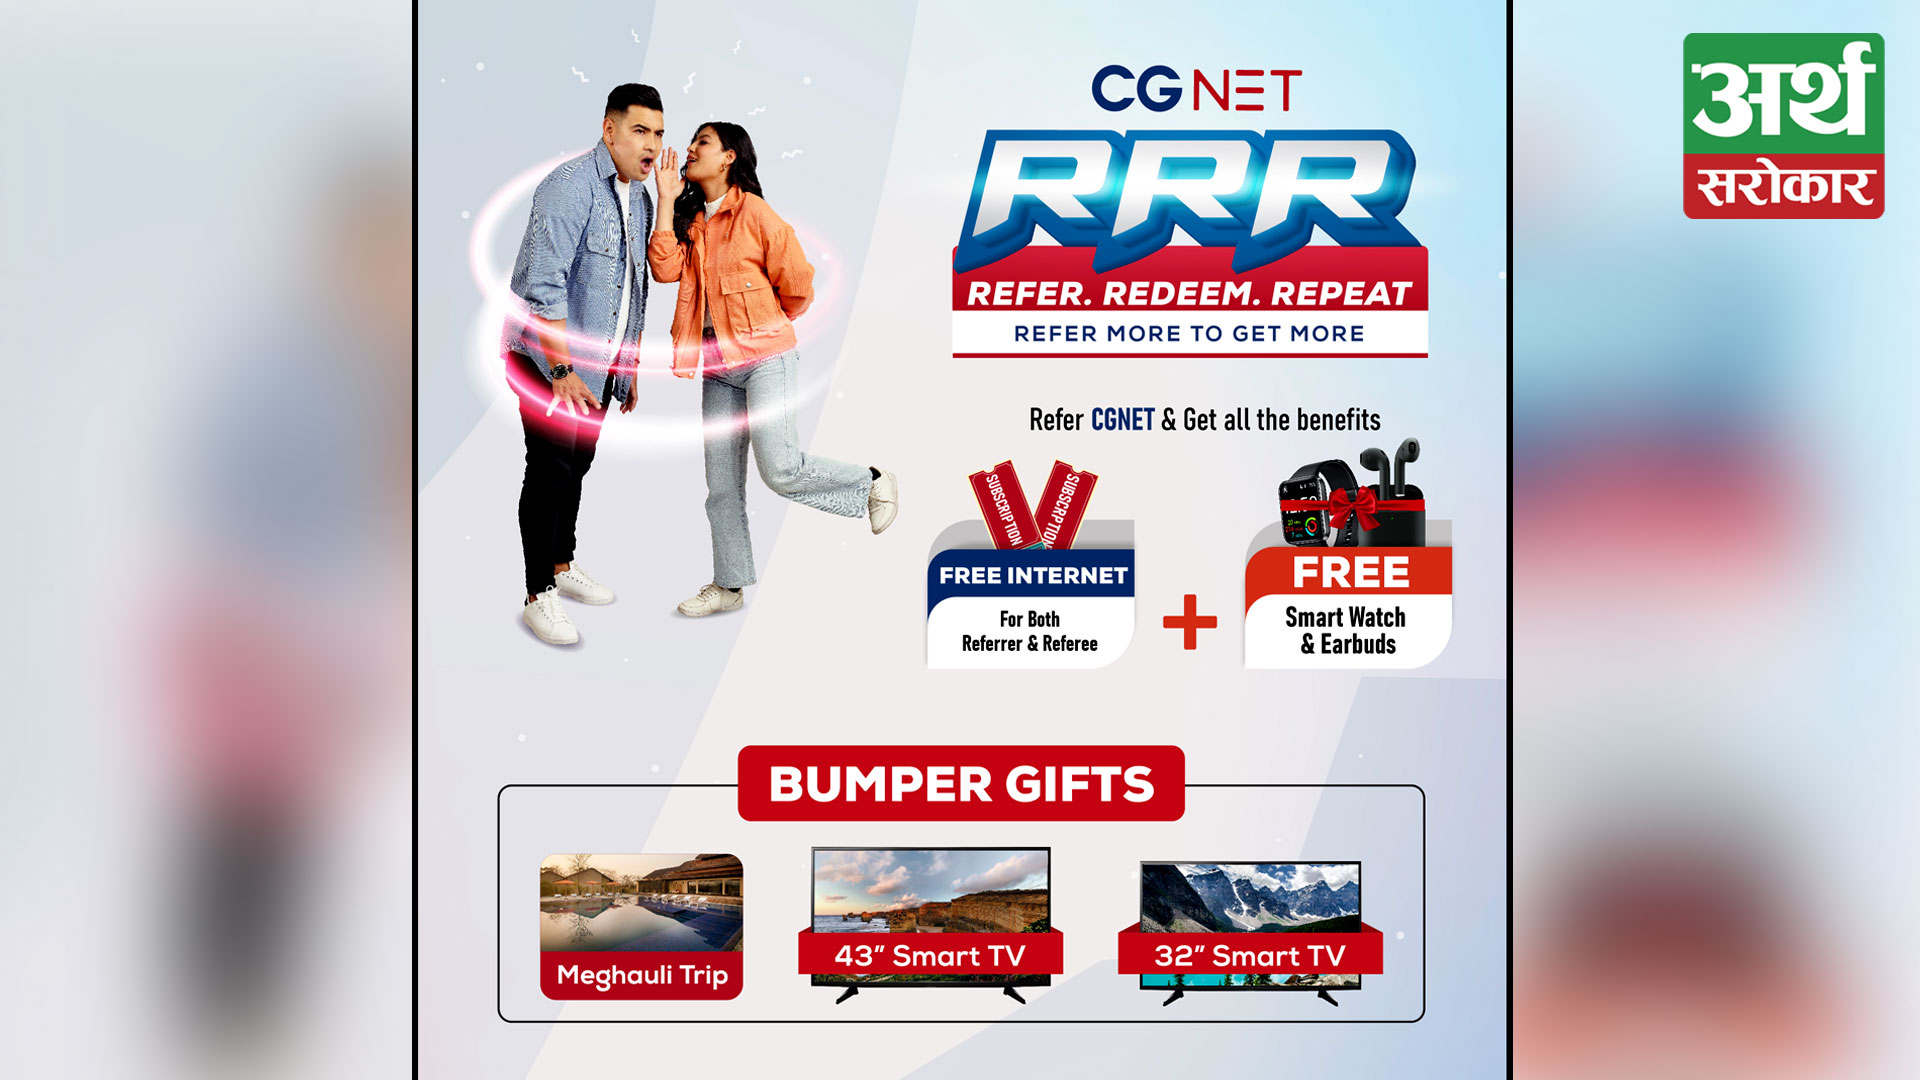 CGNET Unveils RRR Offer: Refer, Redeem, Repeat